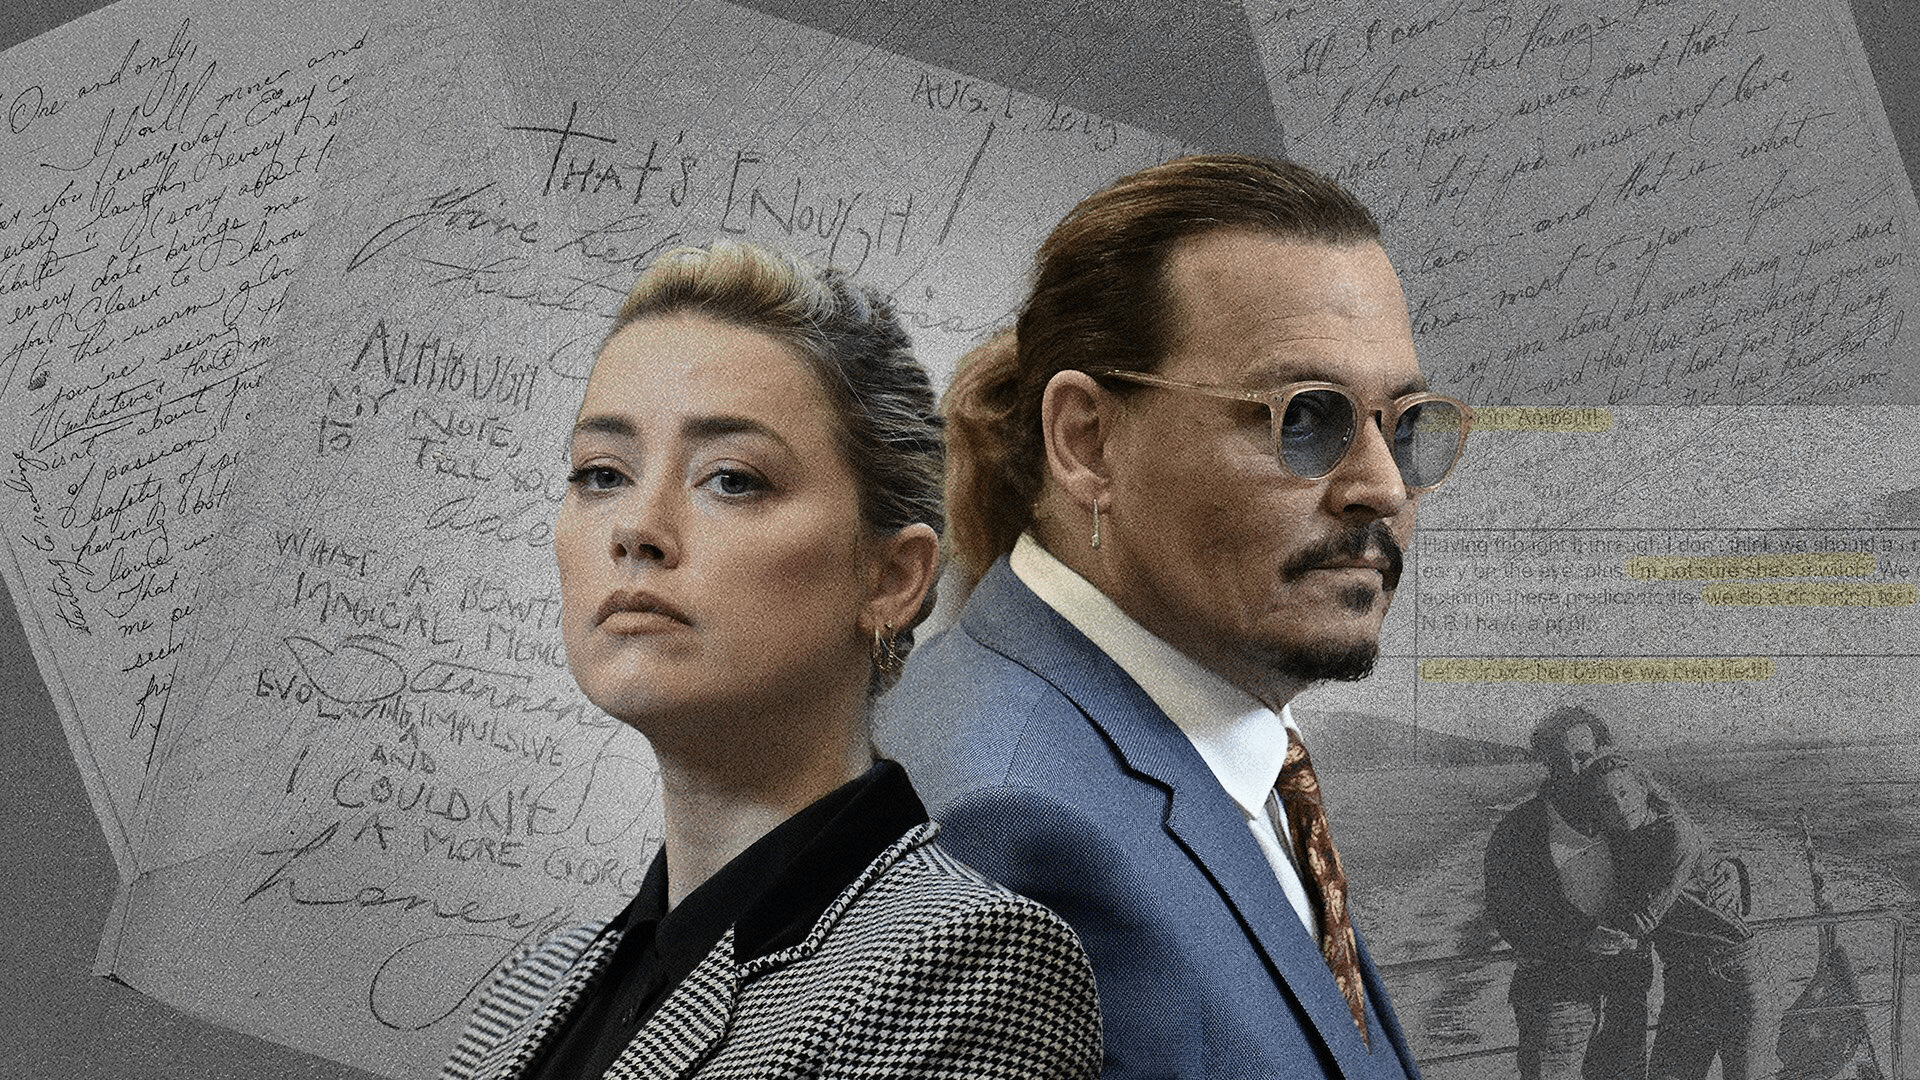 John C. Depp and Amber Heard